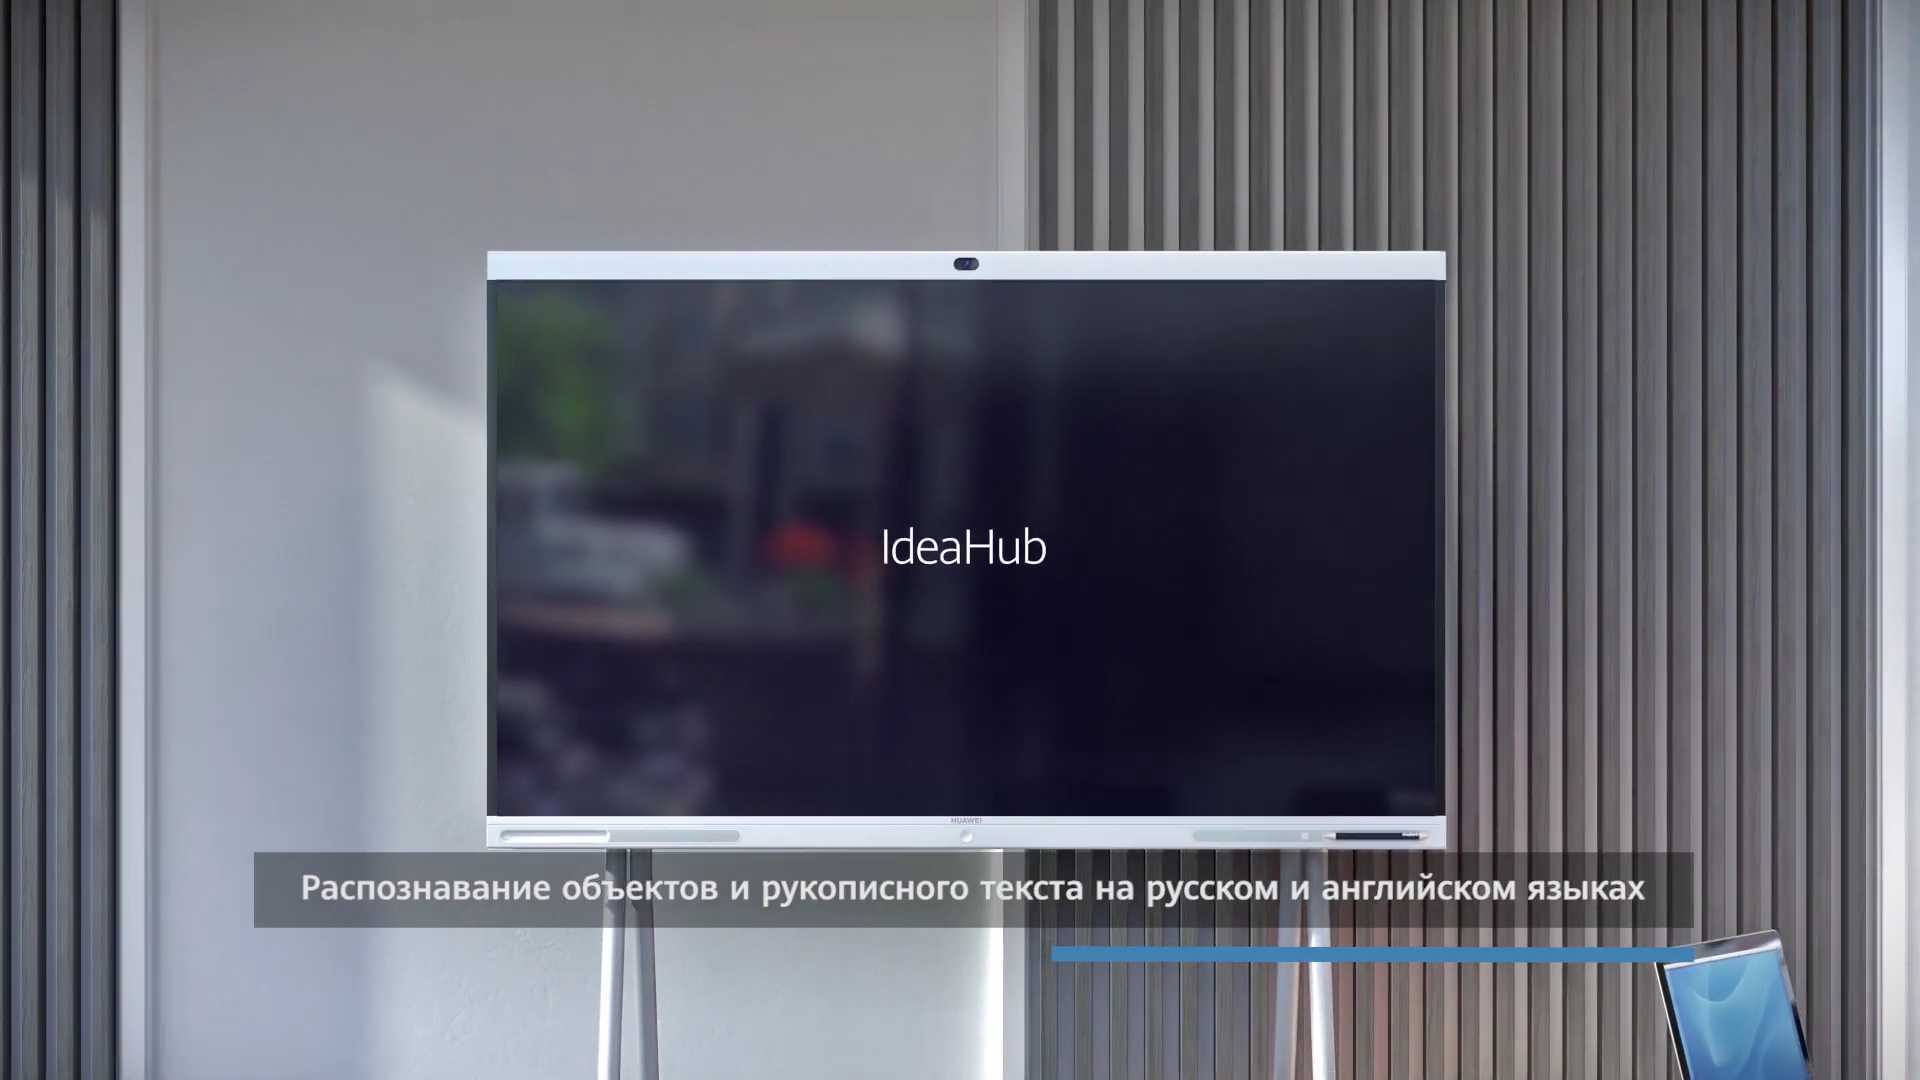 Huawei Ideahub 欧洲宣传技术3D产品视频